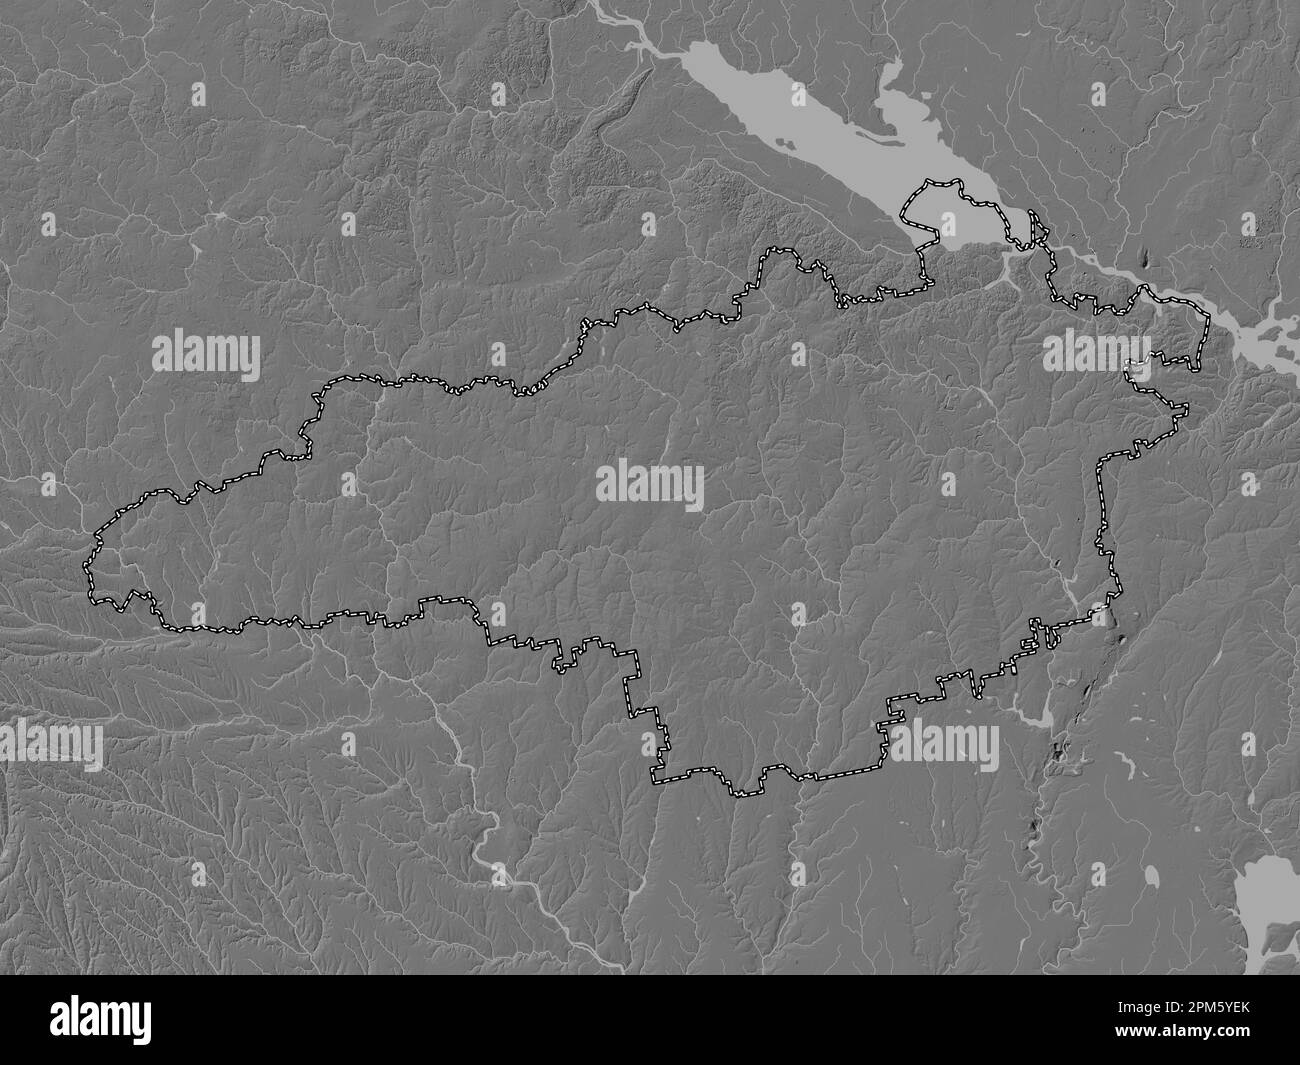 Kirovohrad, region of Ukraine. Bilevel elevation map with lakes and rivers Stock Photo